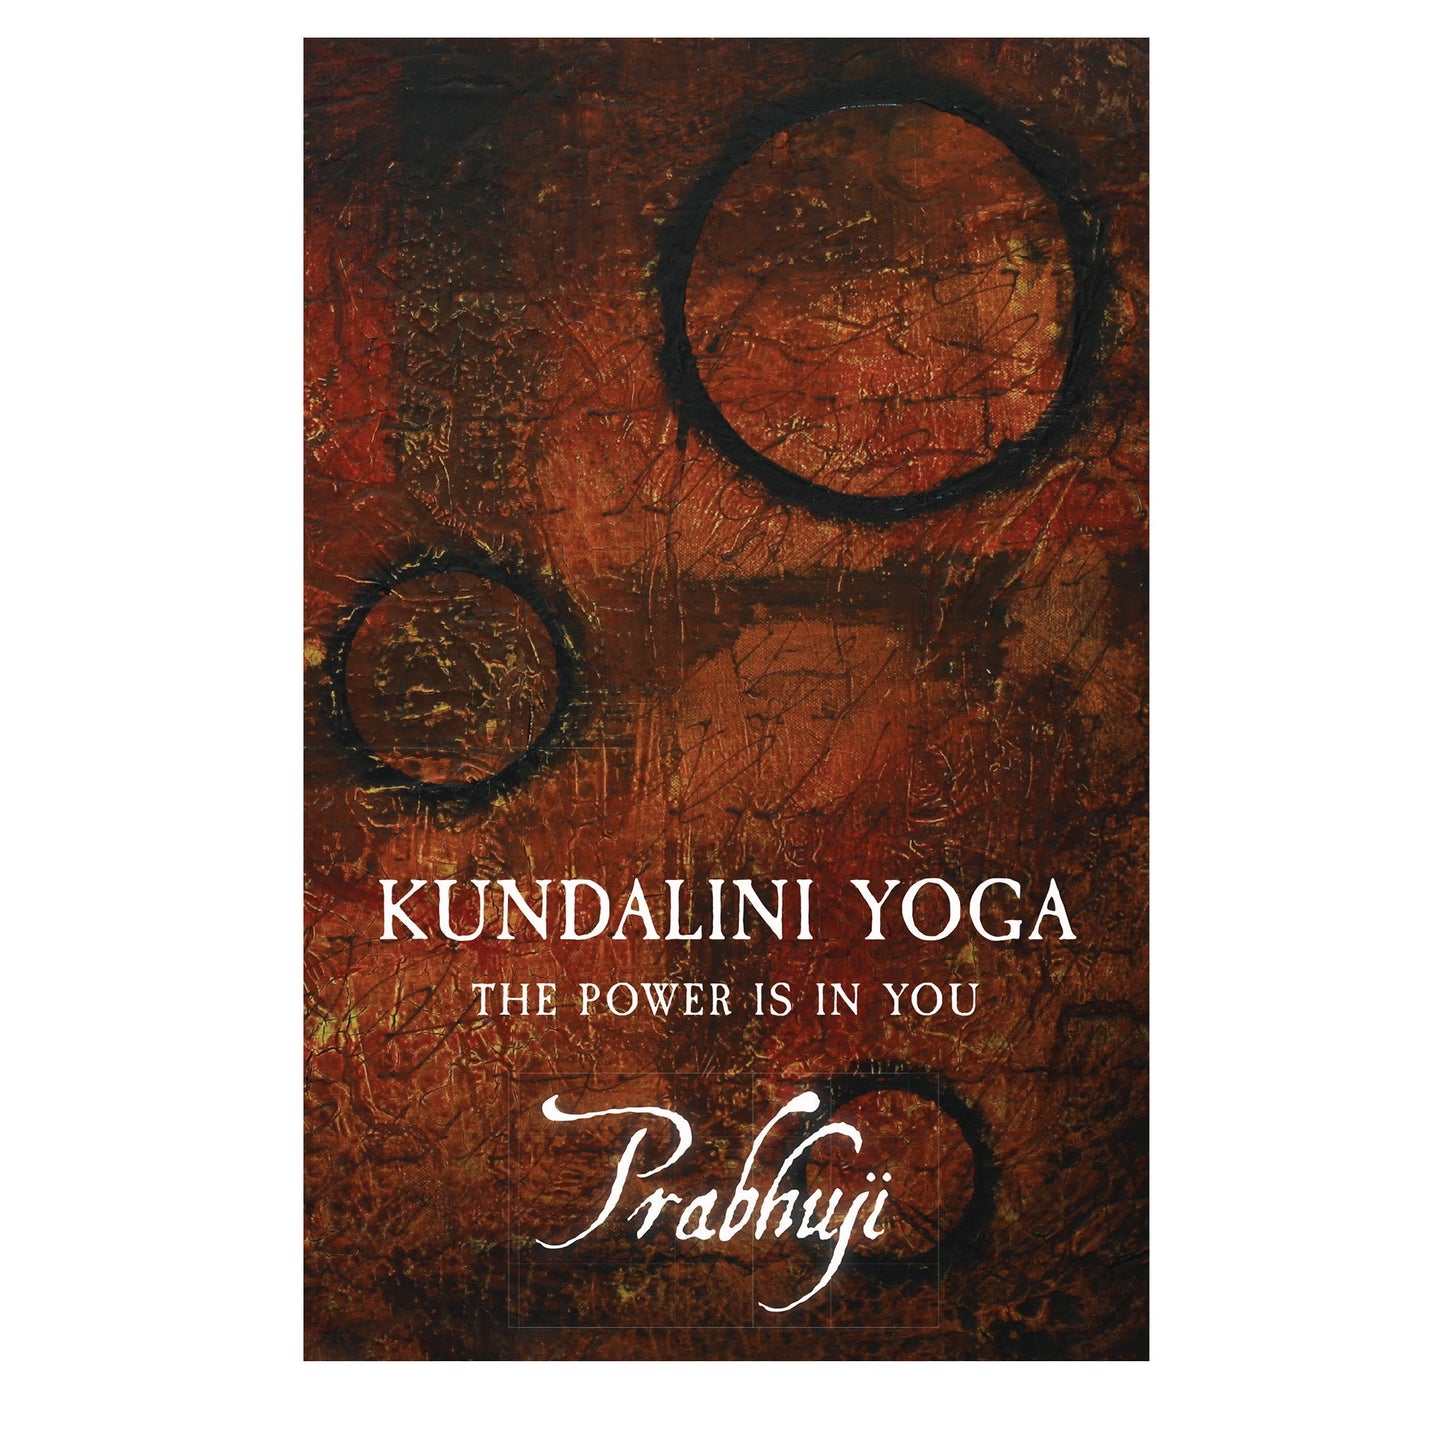 Kundalini yoga - the power is in you by Prabhuji (Paperback - English) - Tree Spirit Wellness